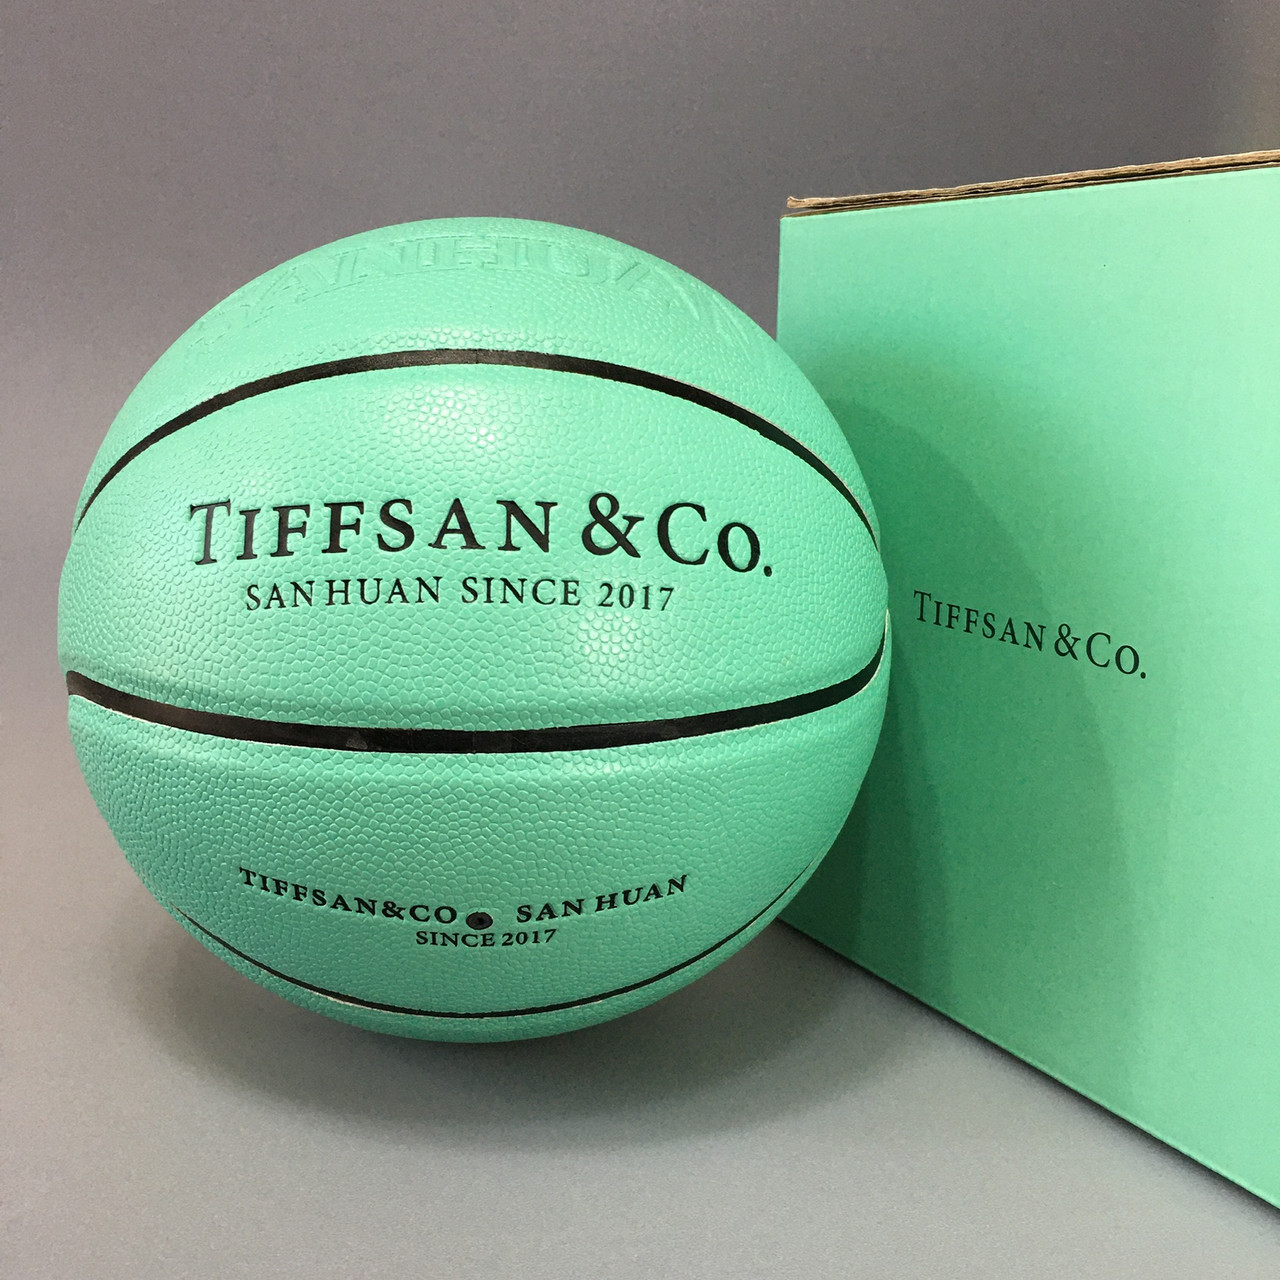 Професійний баскетбольний м'яч TIFFSAN & CO size: 7